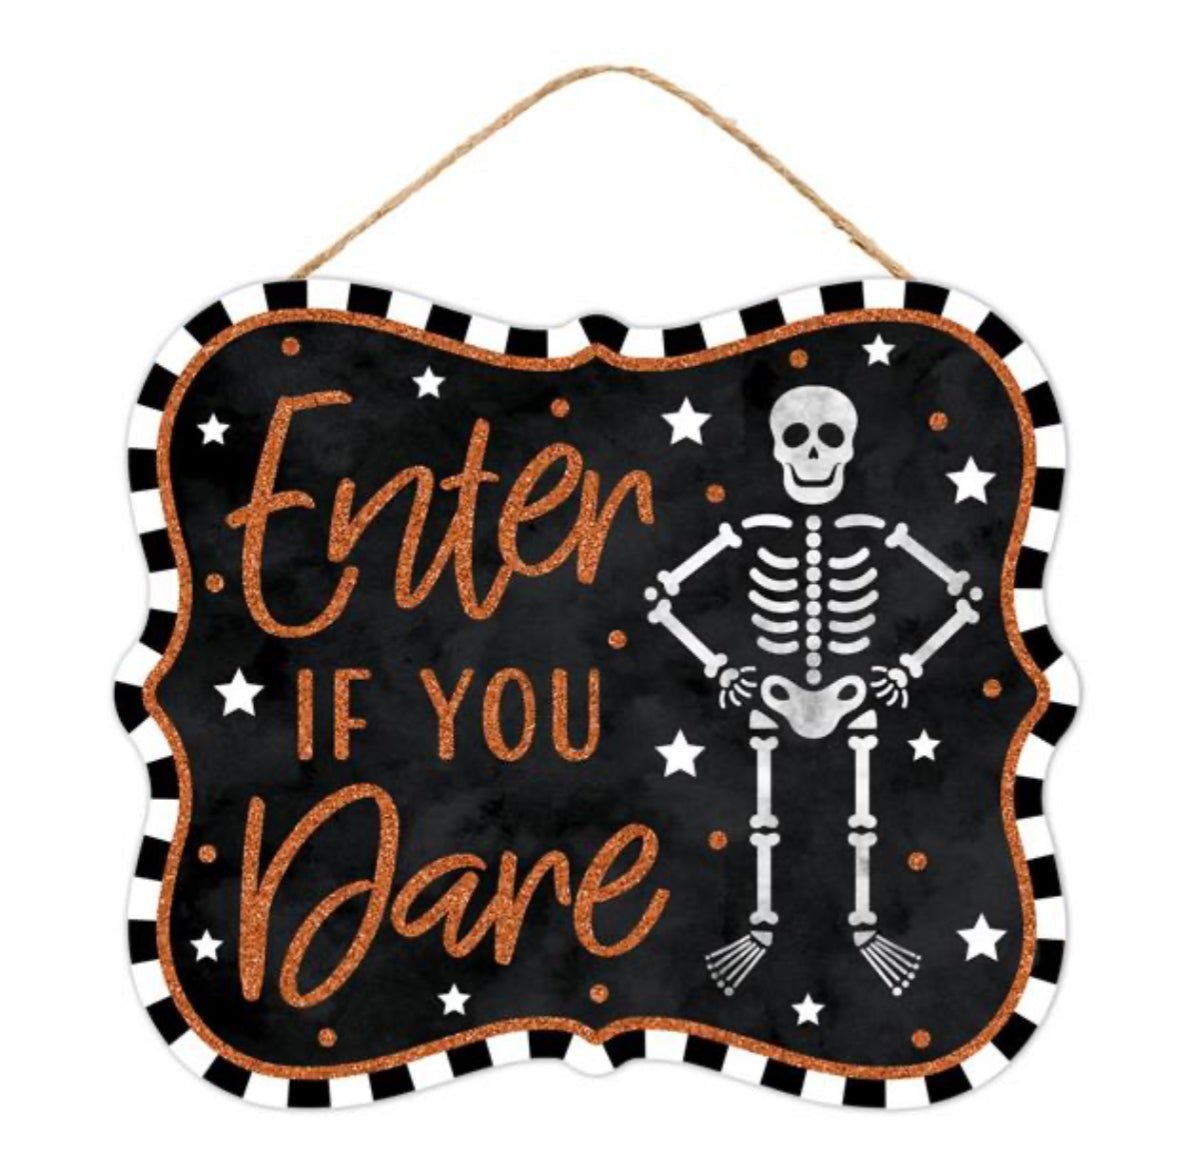 Black and white skeleton halloween sign - Greenery MarketSeasonal & Holiday DecorationsAP8949